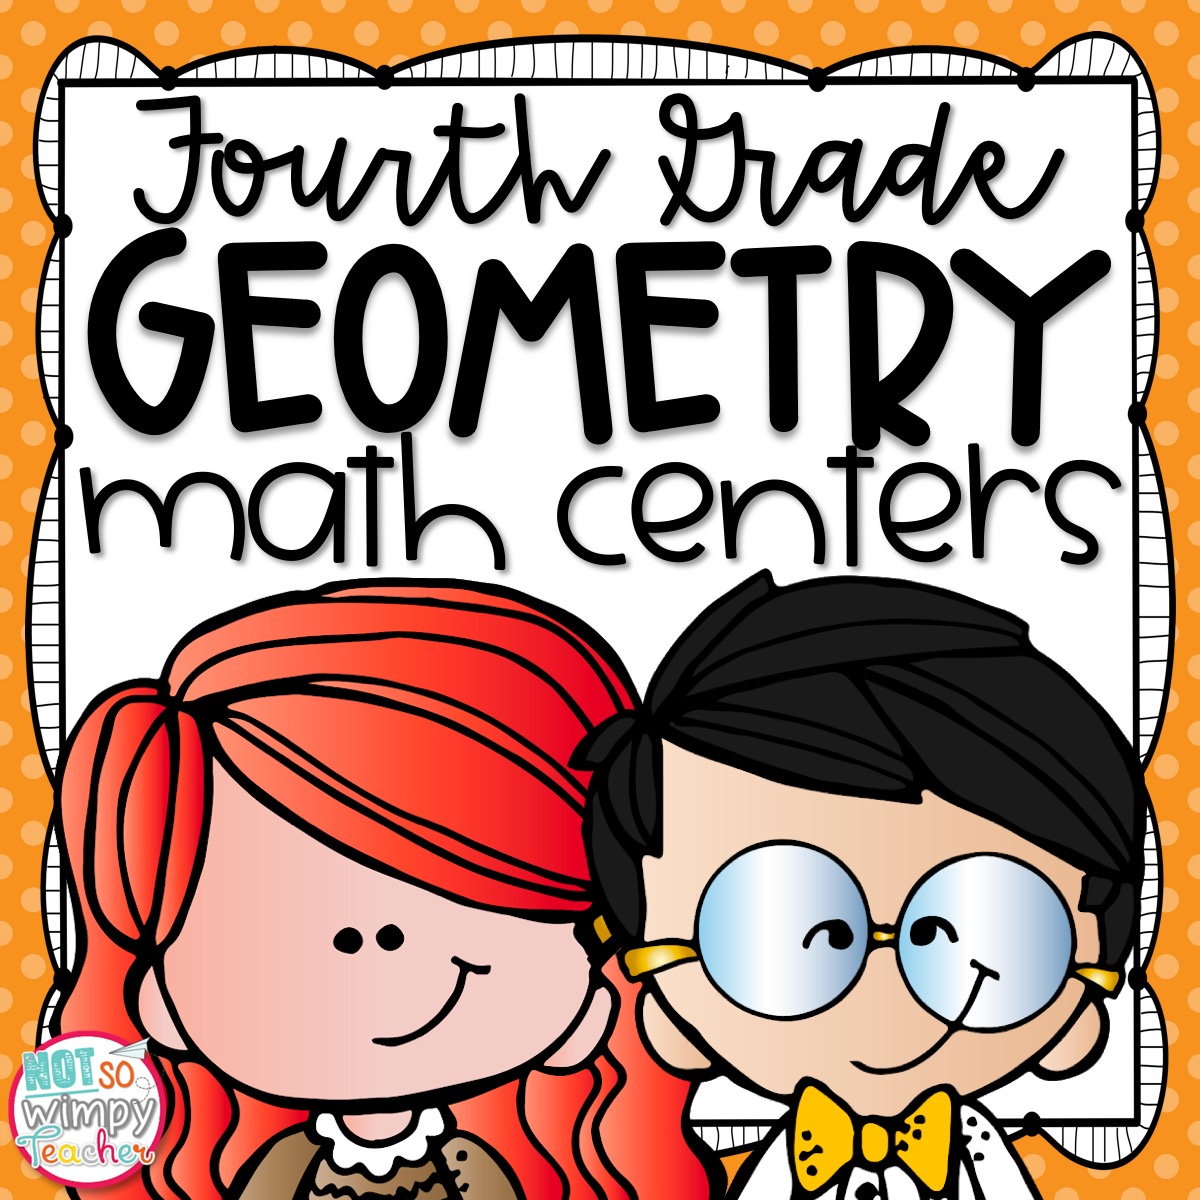 geometry-fourth-grade-math-centers-not-so-wimpy-teacher